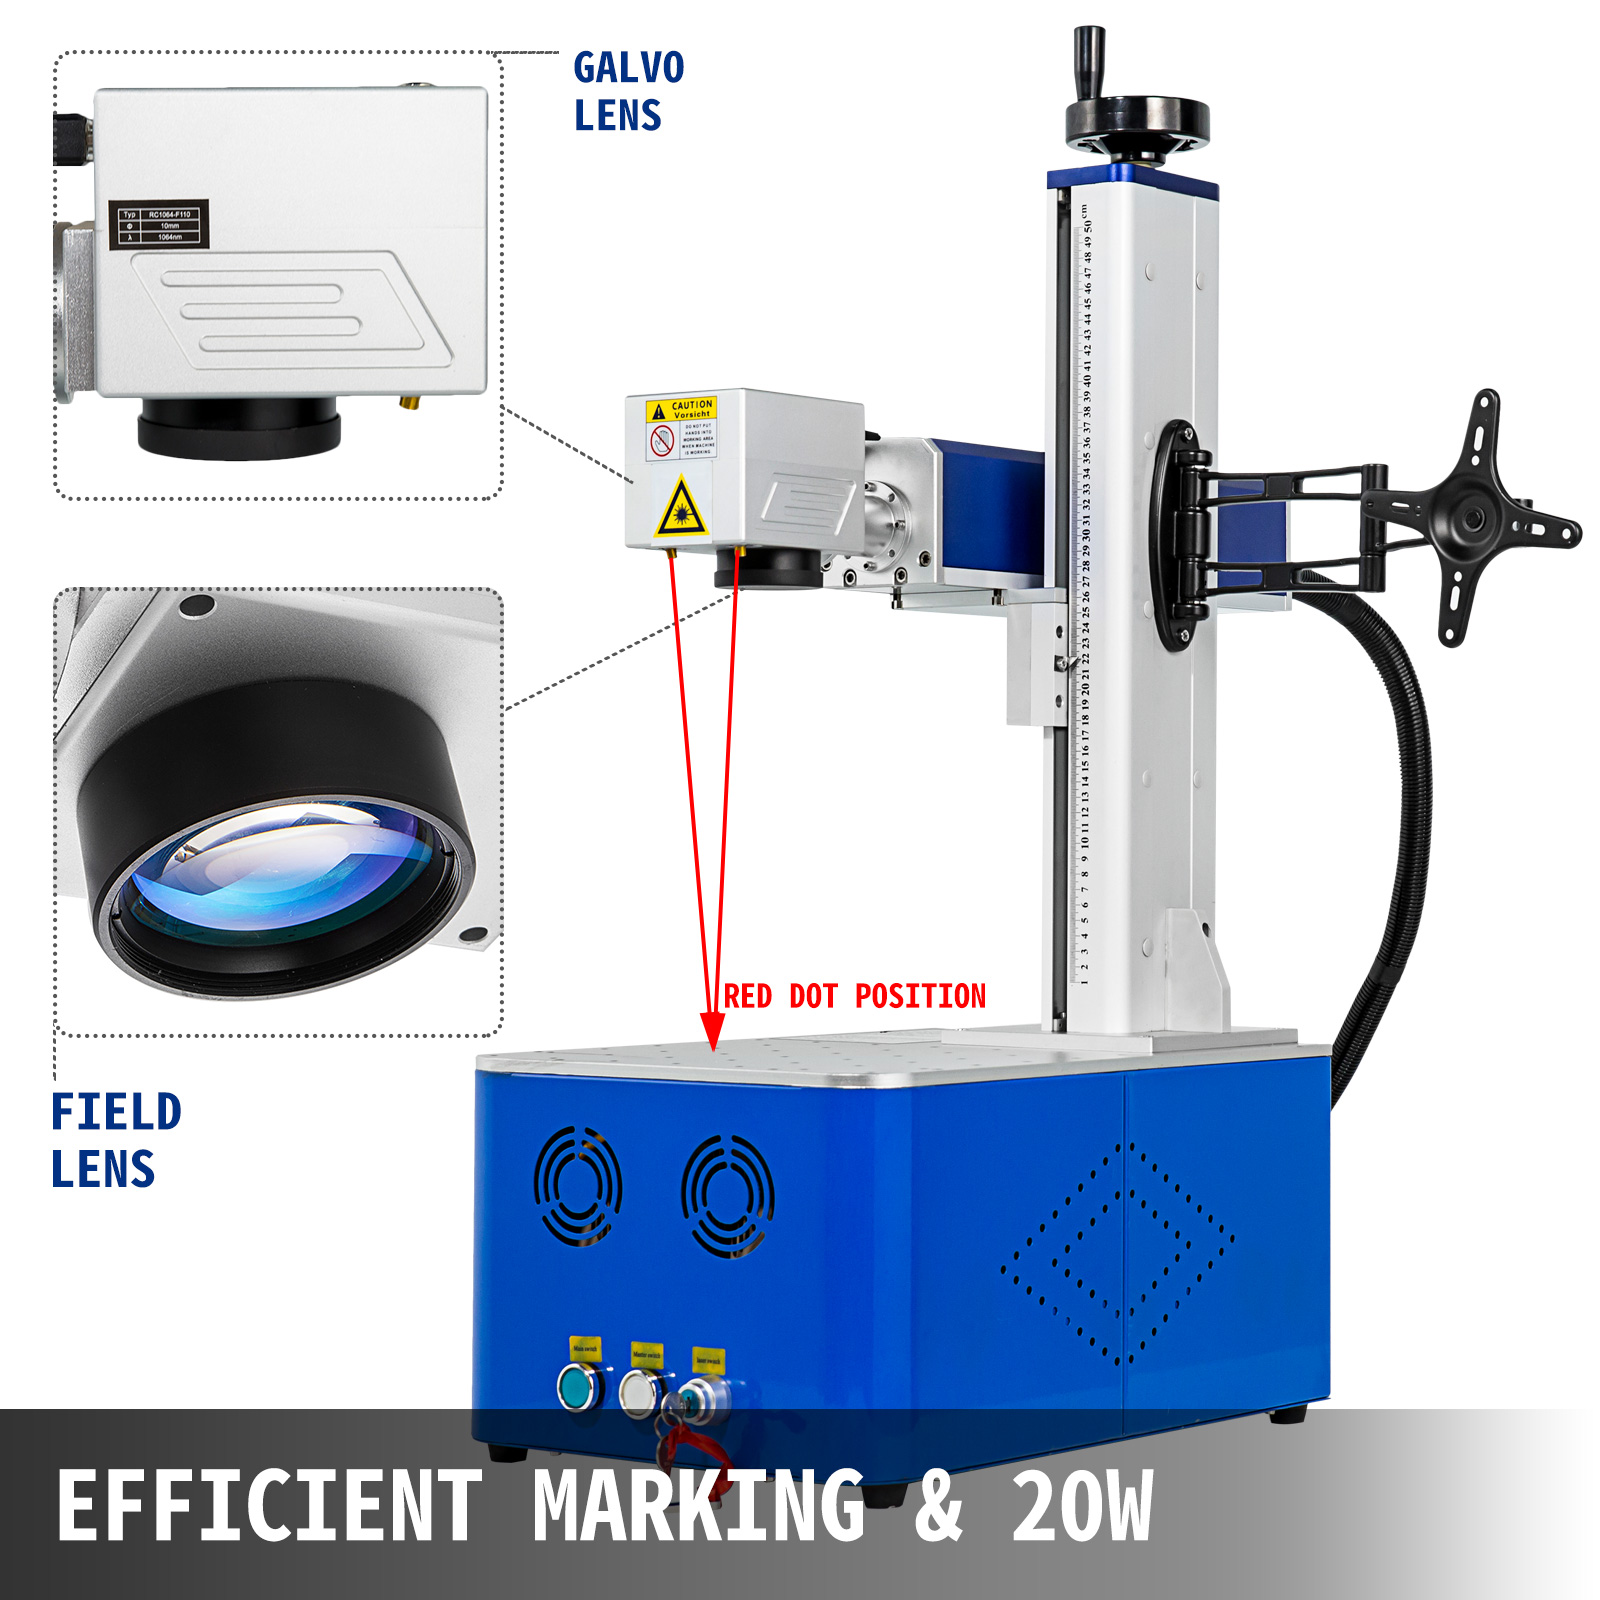 máquina de la marca del grabado del laser de la fibra del no metal